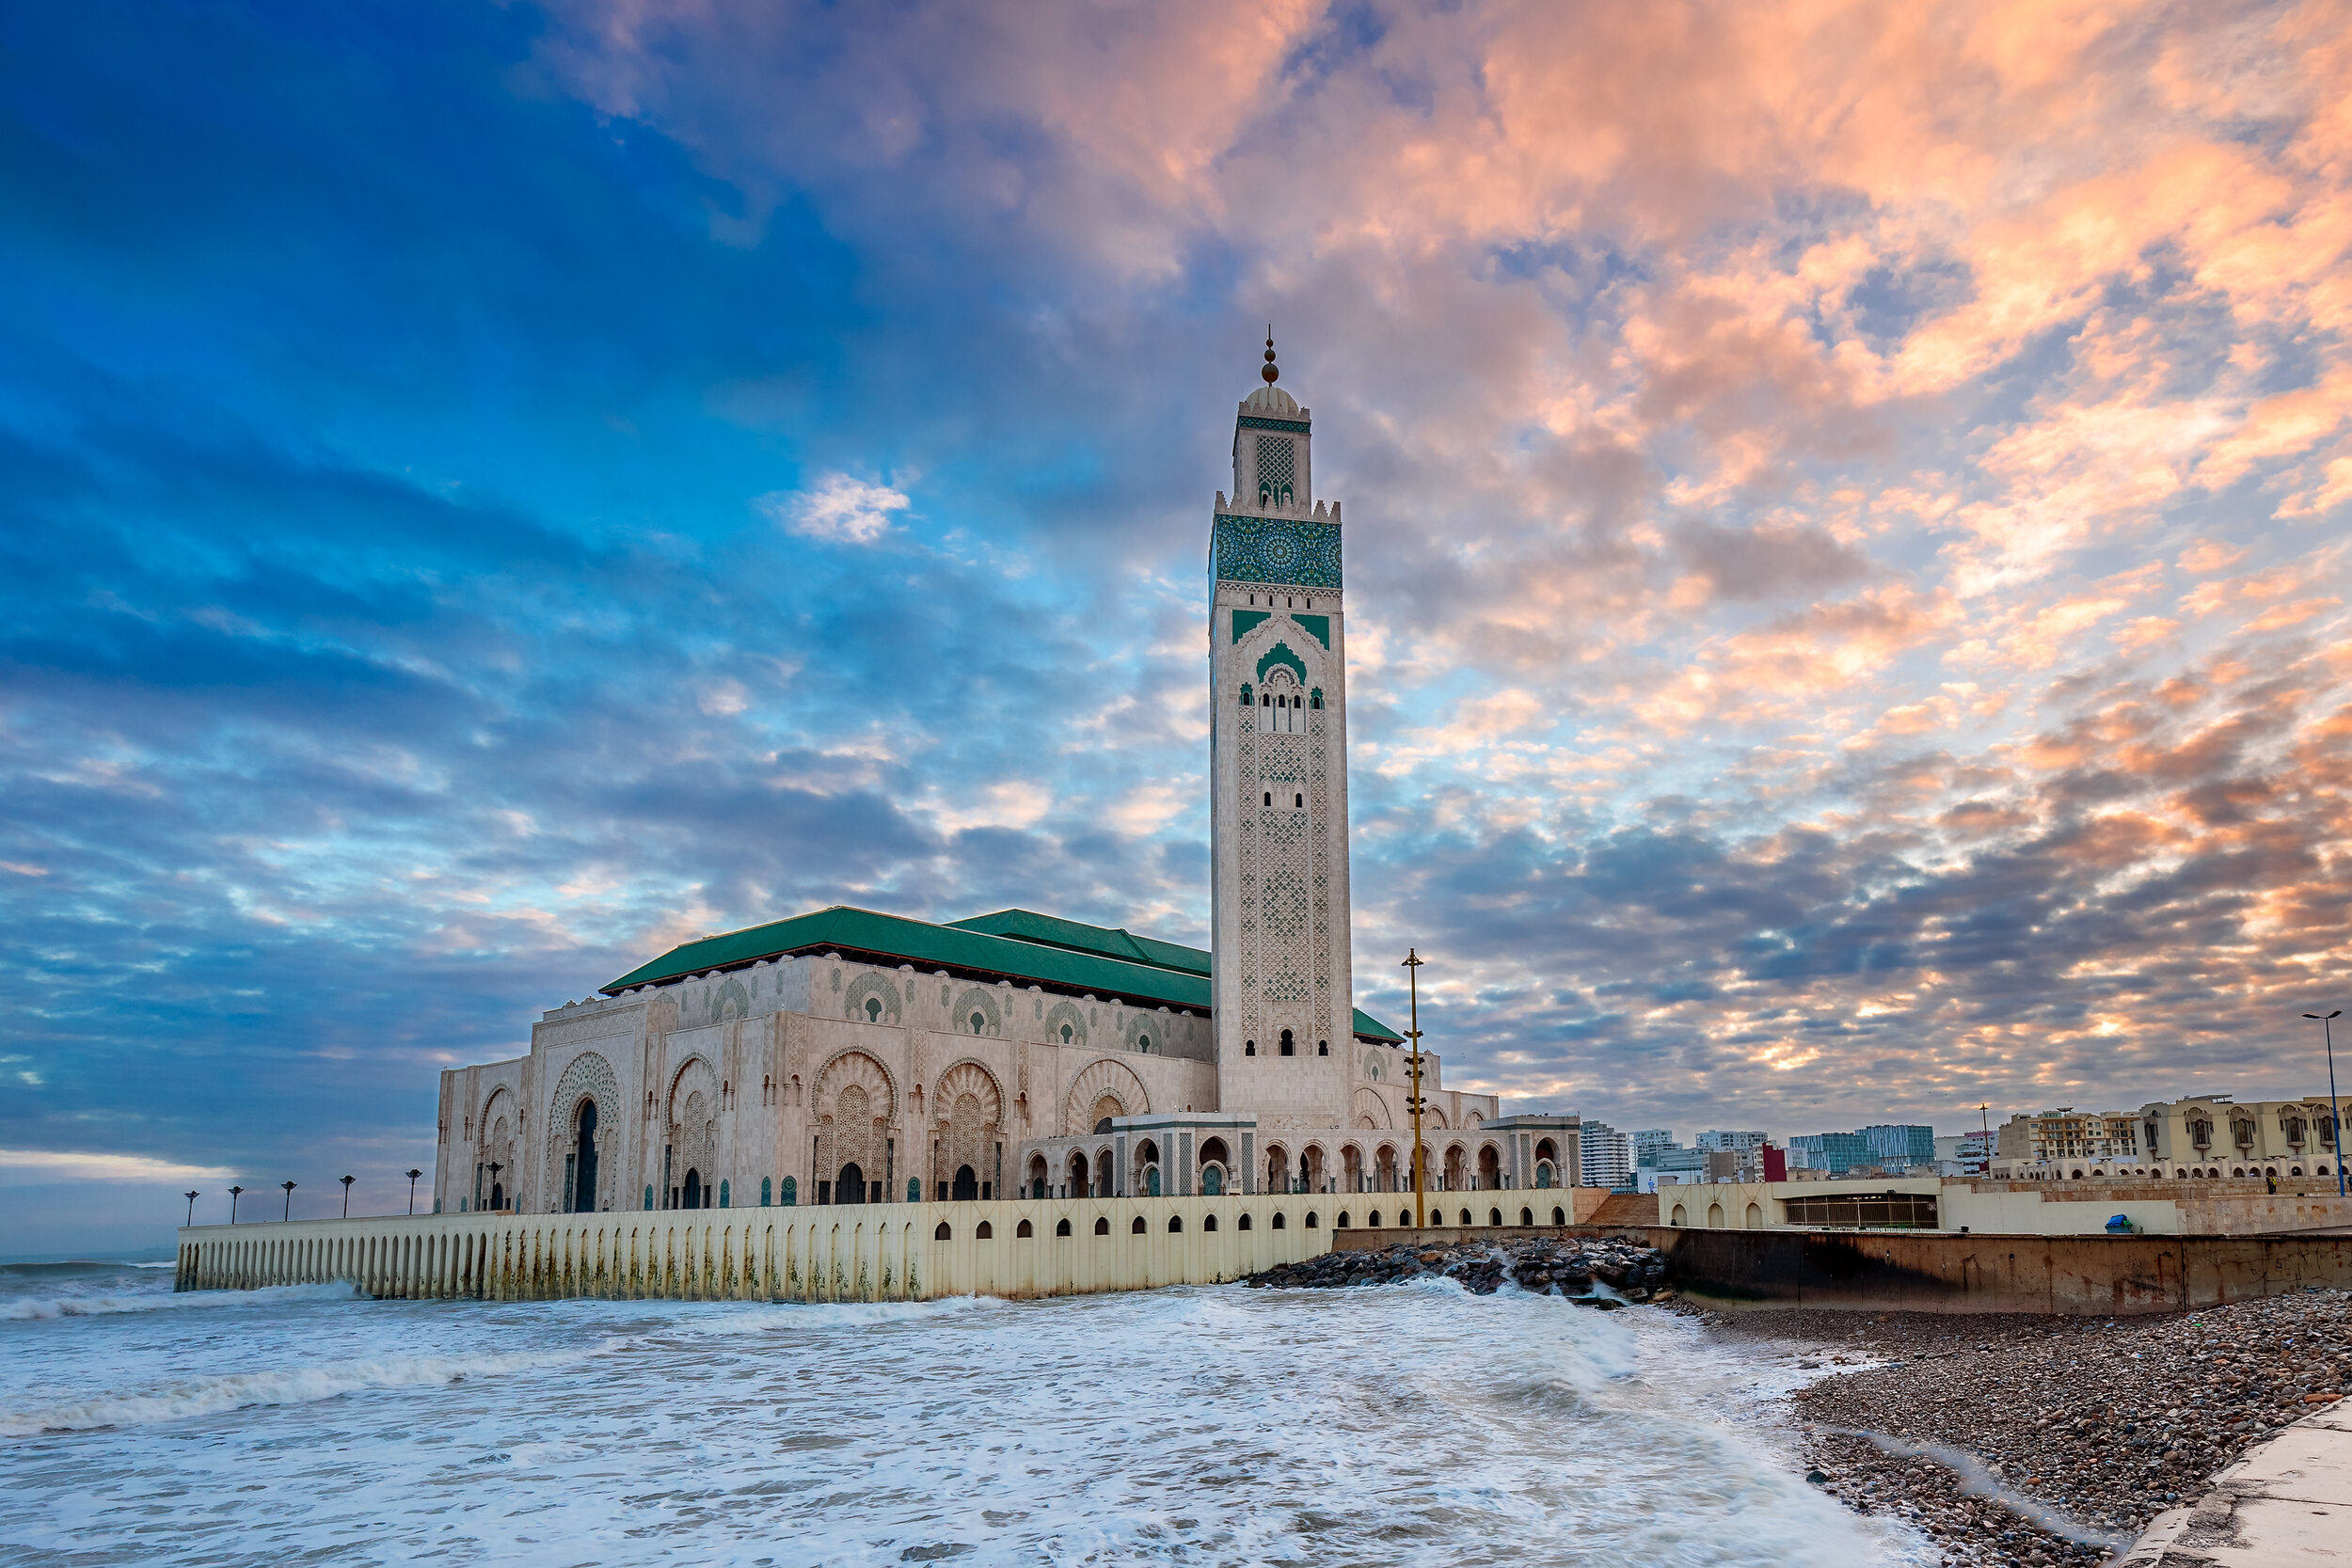  The Hassan II Mosque in Casablanca, Morocco 